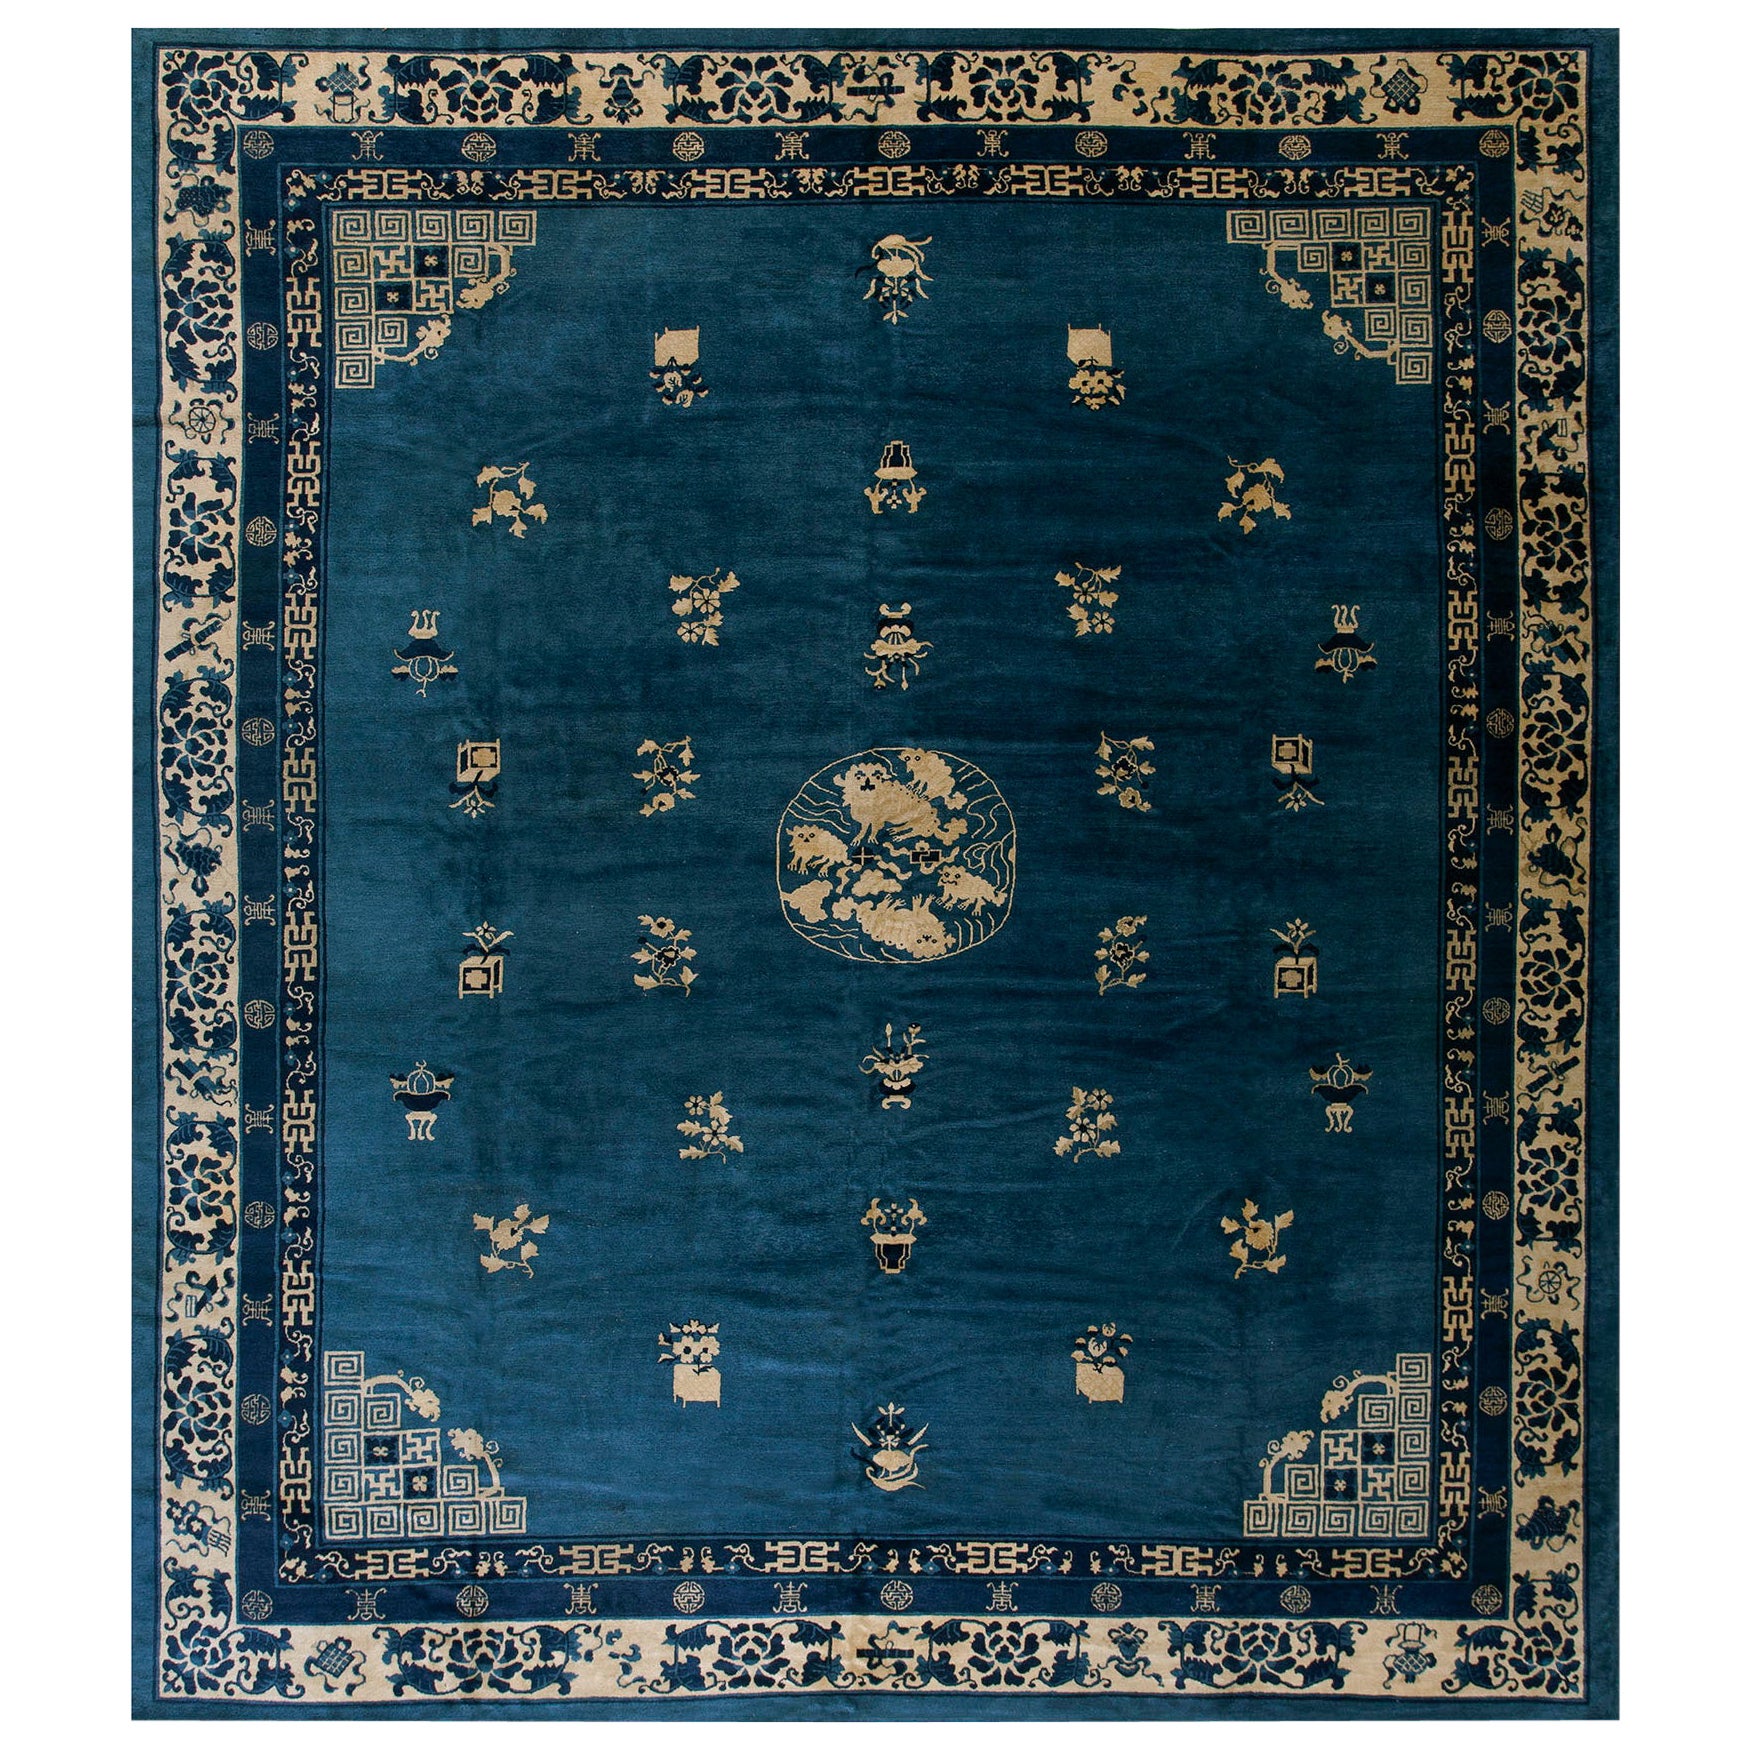 Early 20th Century Chinese Peking Carpet ( 10'6" x 12'6" - 320 x 380 cm )